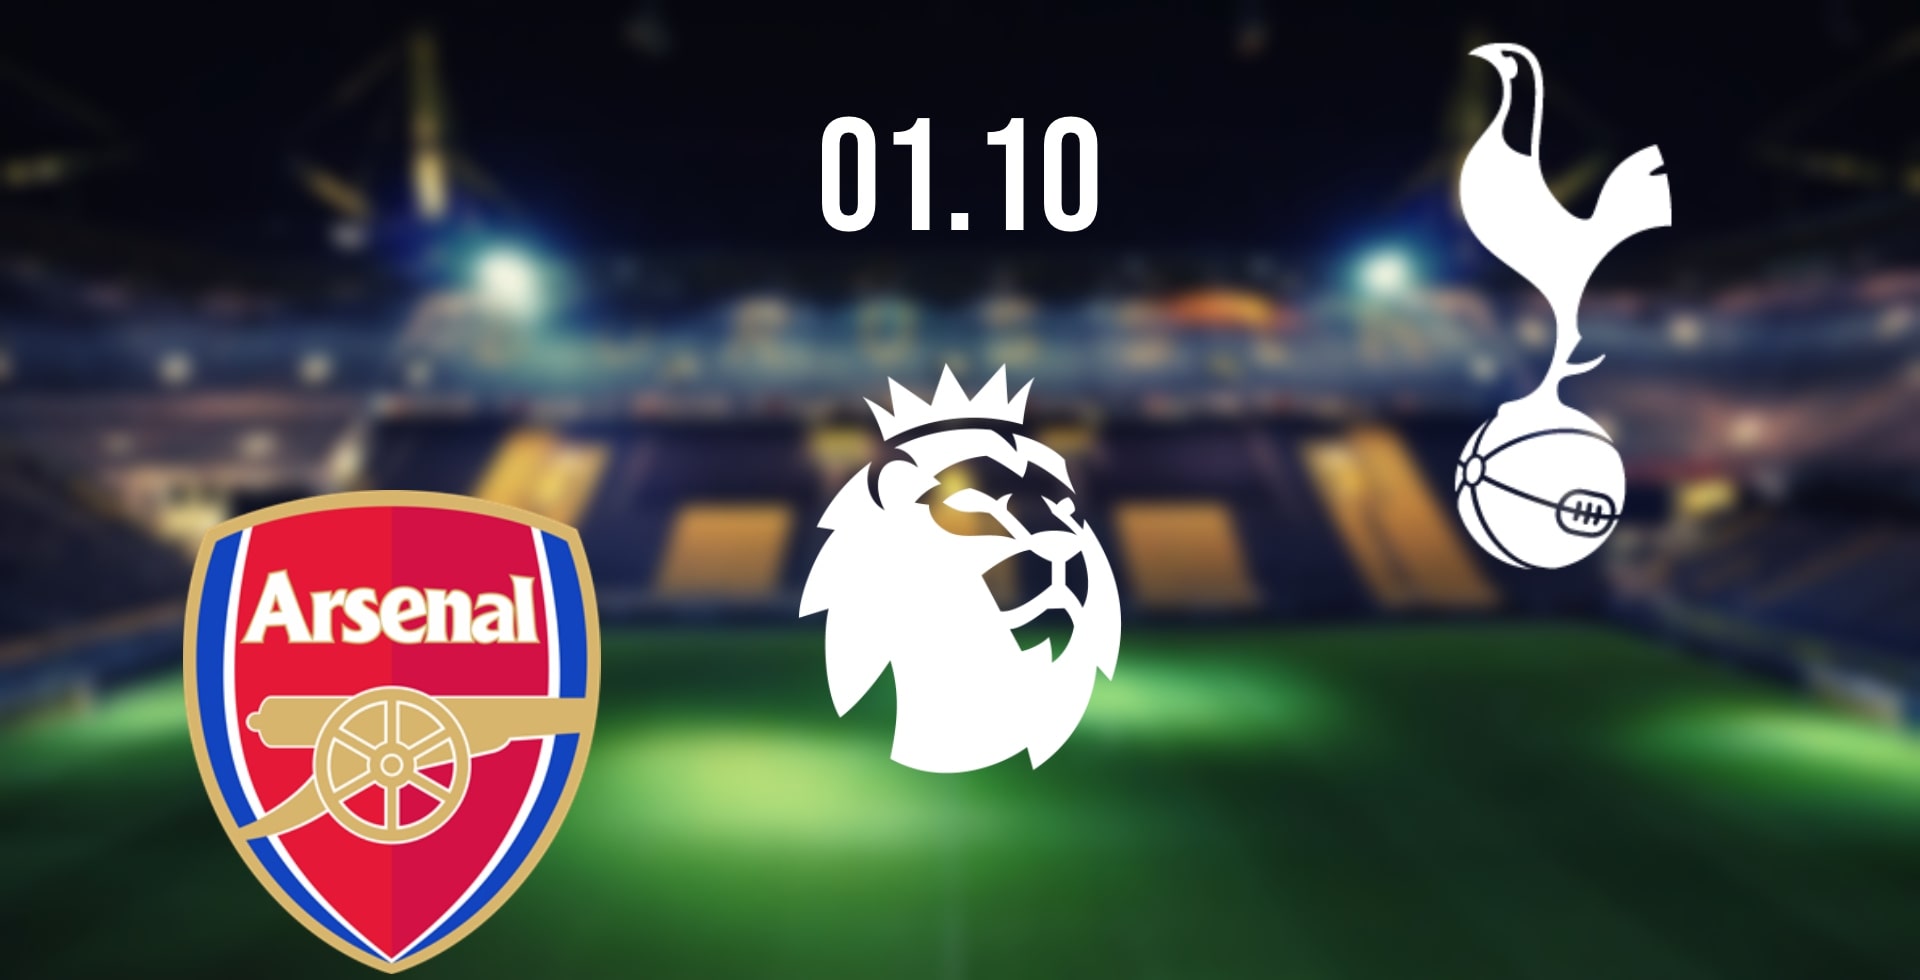 Arsenal vs Tottenham Prediction: Premier League Match on 01.10.2022